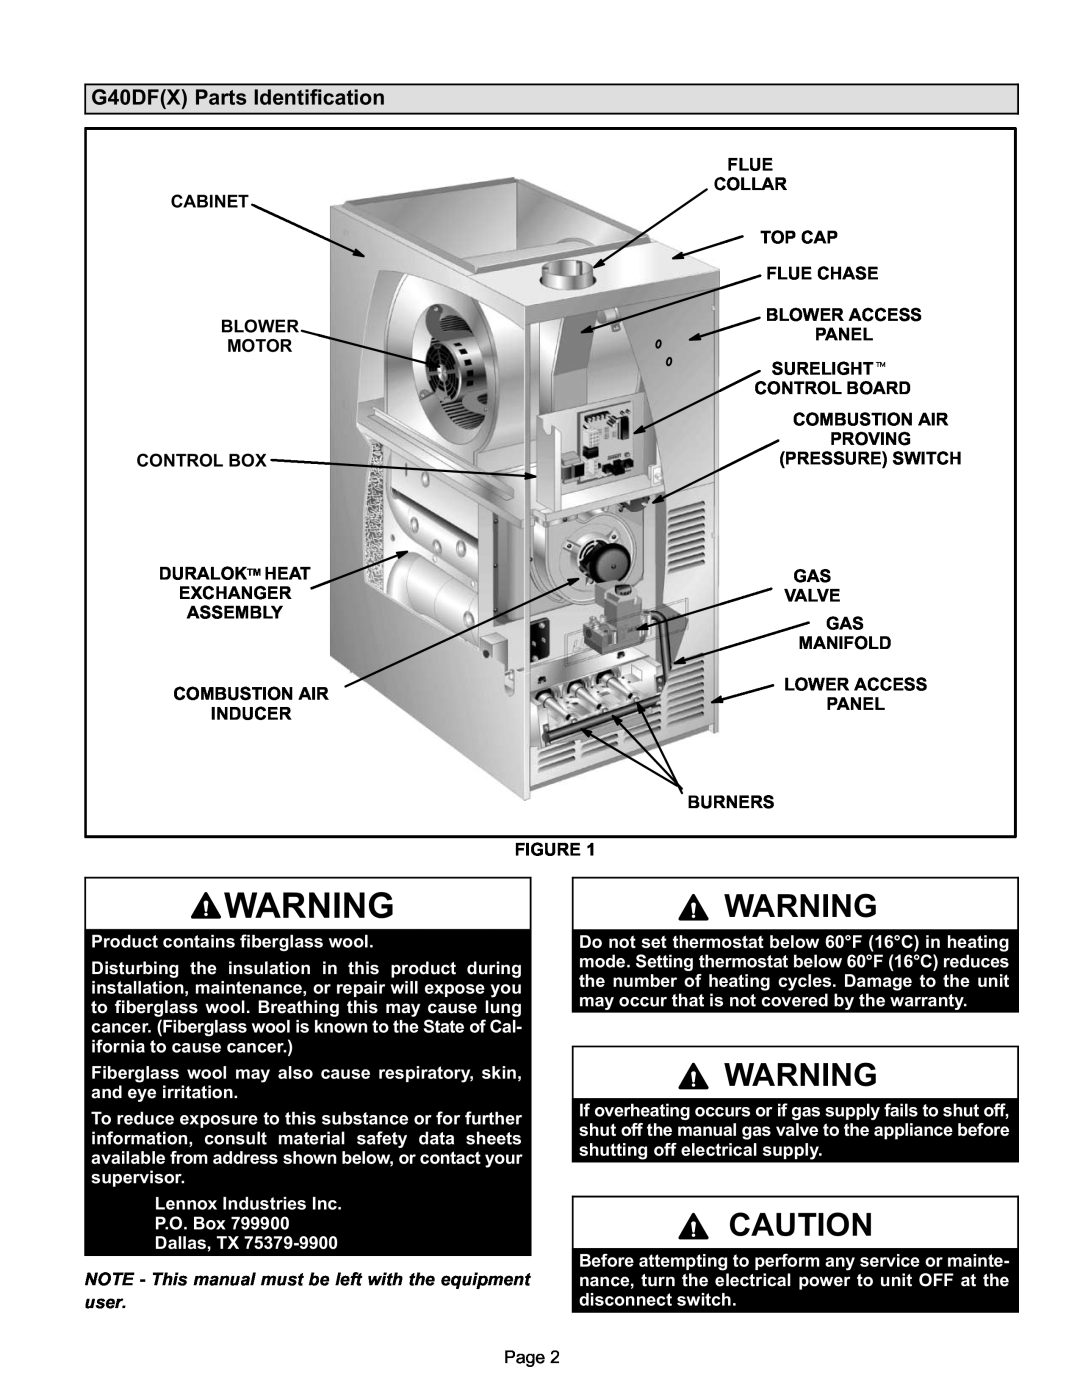 Lennox International Inc G40DF(X) SERIES G40DFX Parts Identification, Cabinet Blower Motor Control Box Duraloktm Heat 